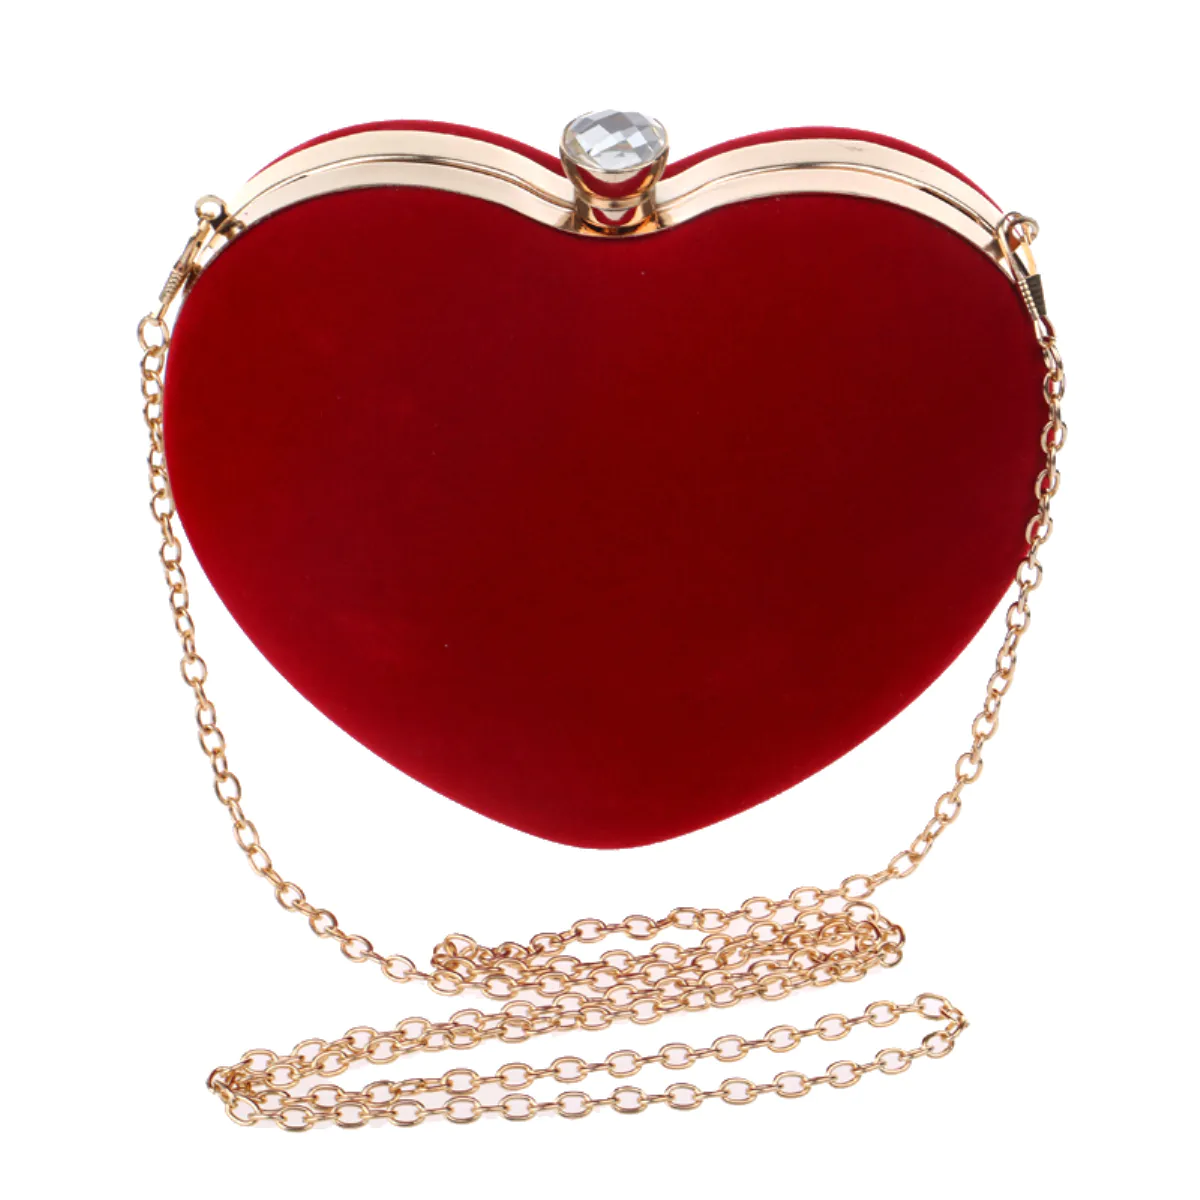 Fashionable Heart Shaped Handbag Evening Party Clutch02